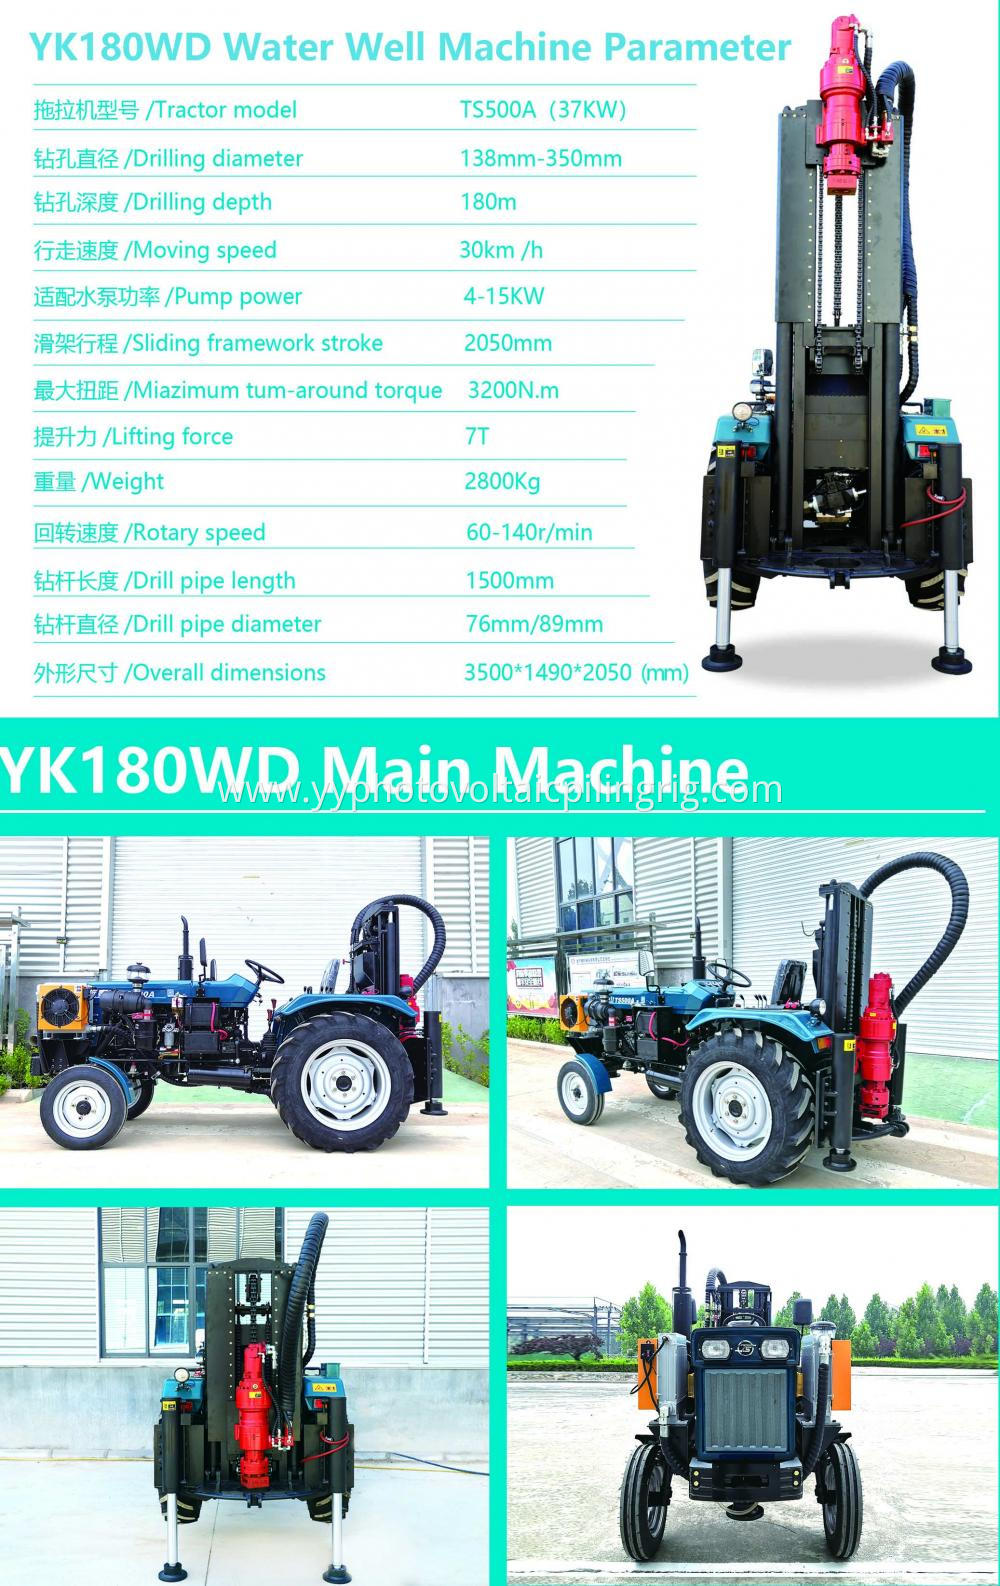 Yk180wd 180m Tractor Water Well Drilling Machine Parameter Jpg